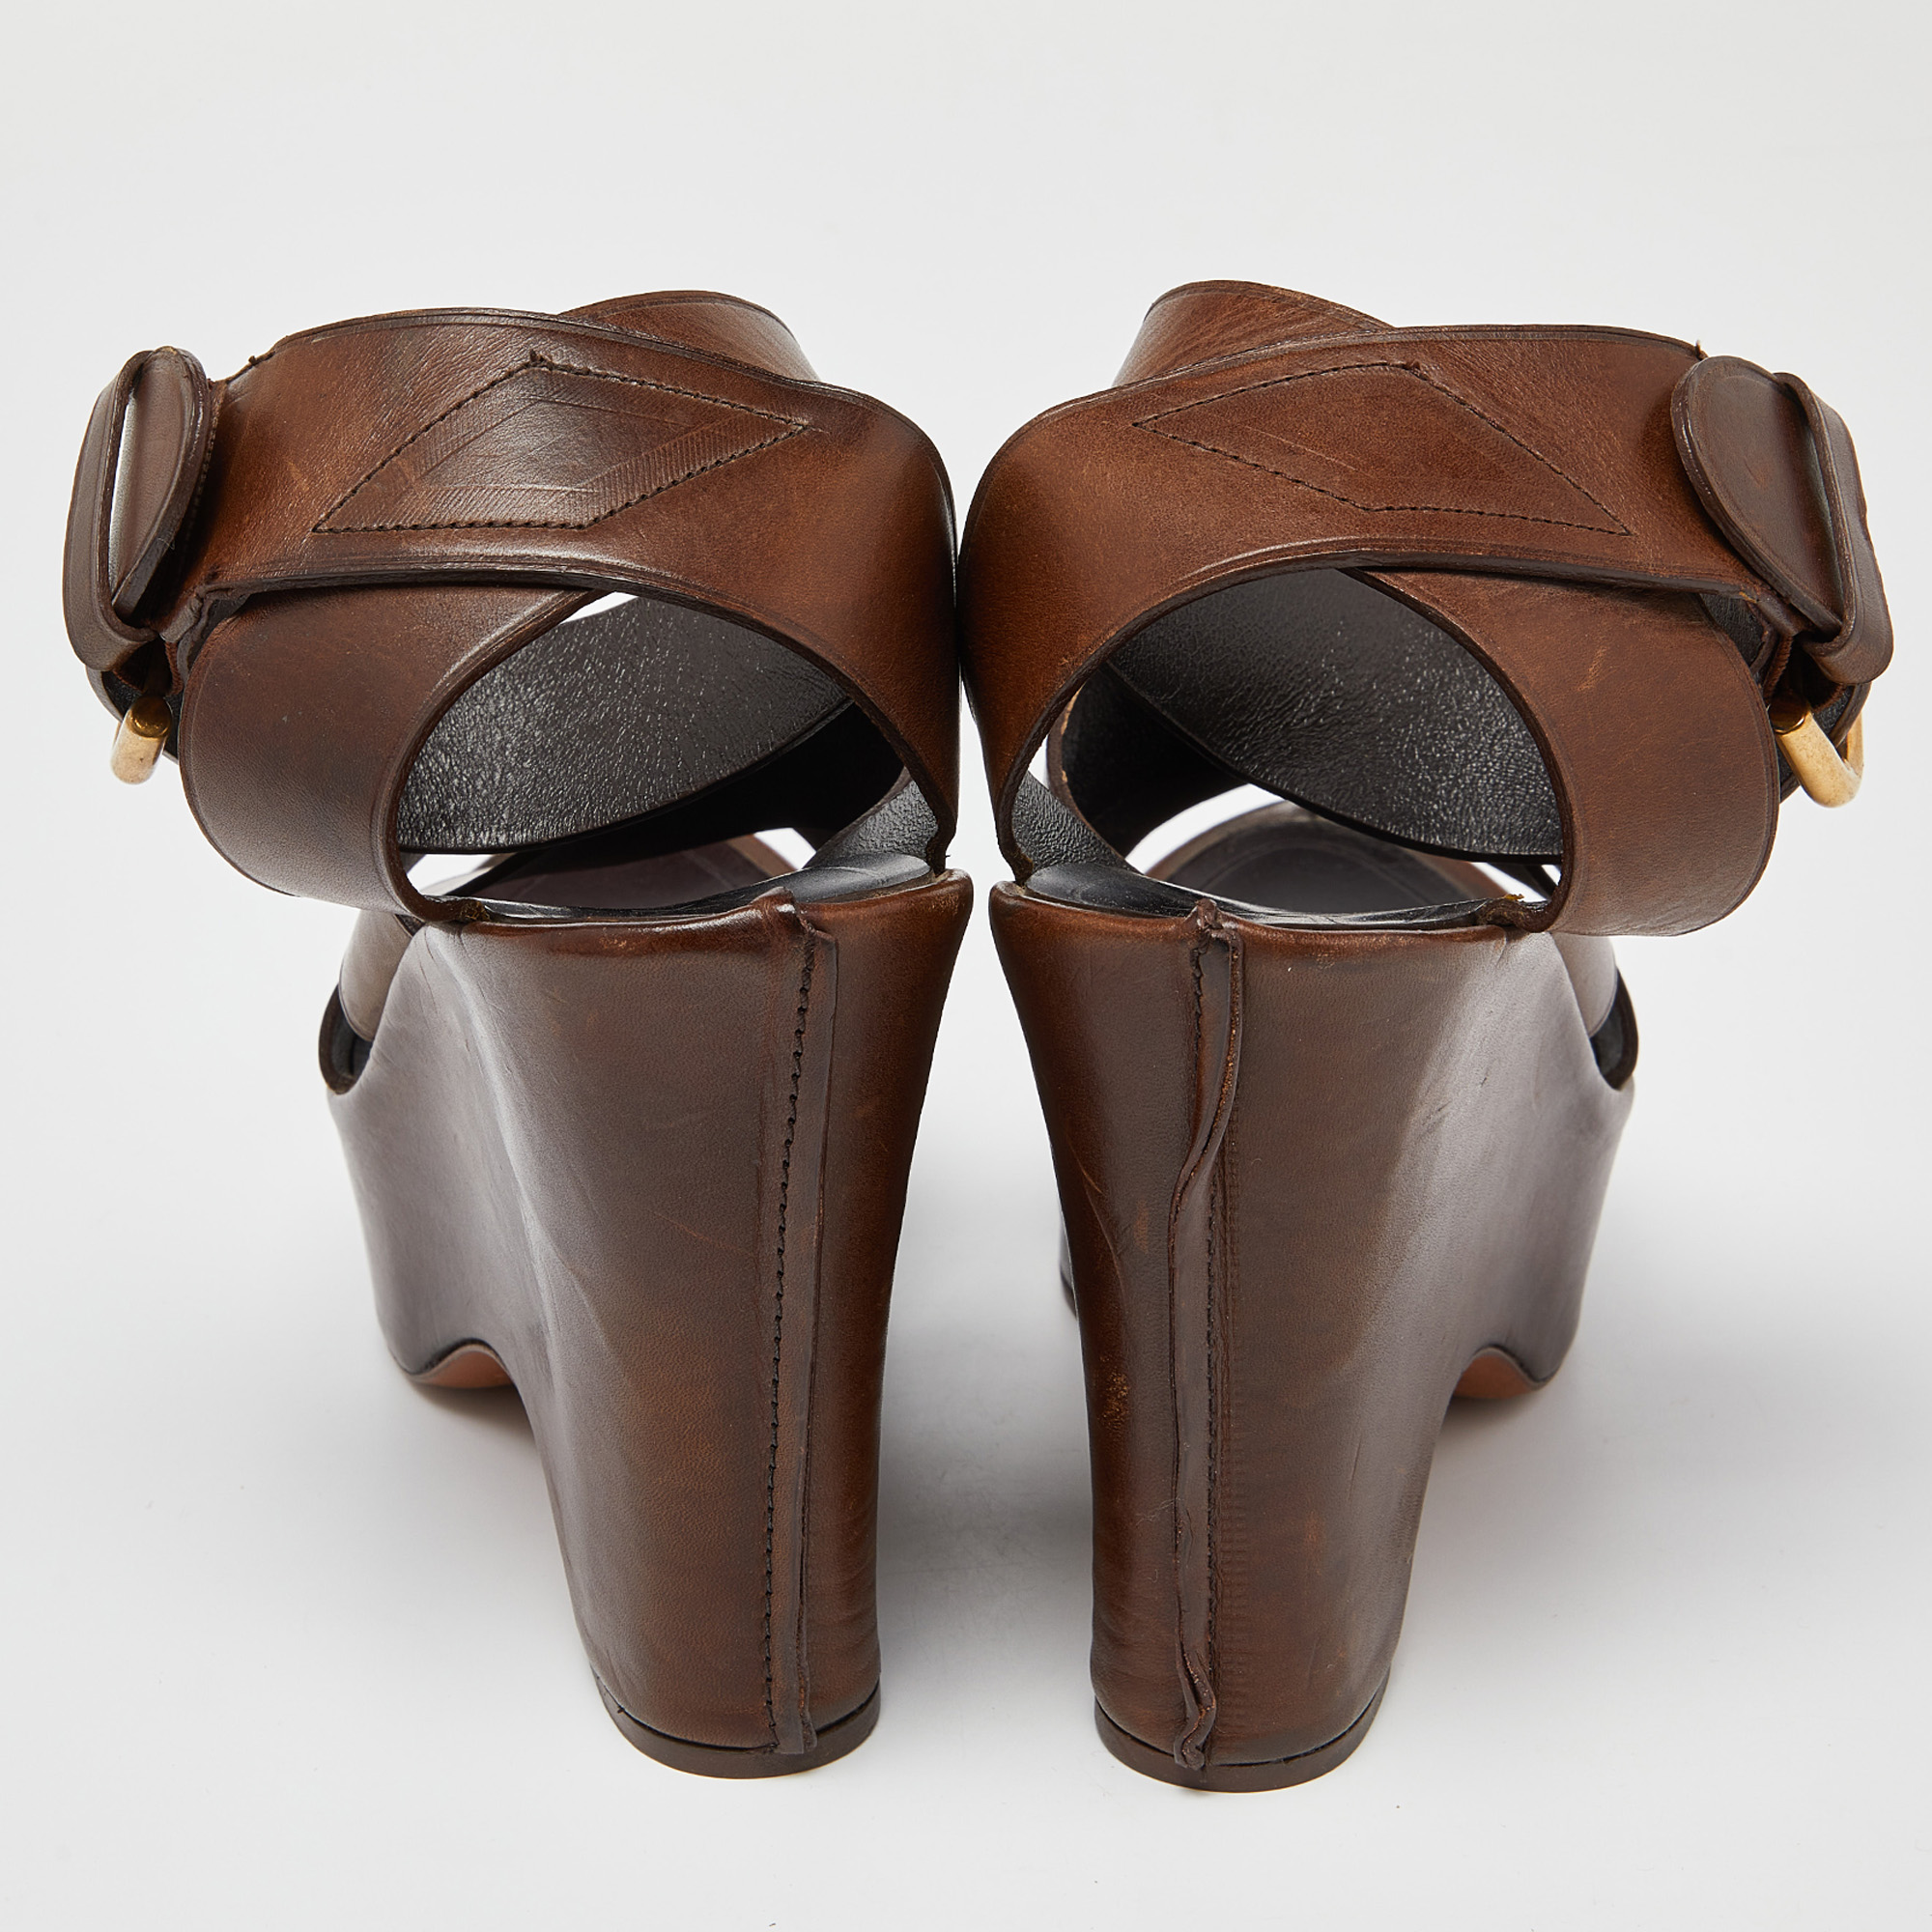 Yves Saint Laurent Brown Leather Wedge Platform Ankle Strap Sandals Size 38